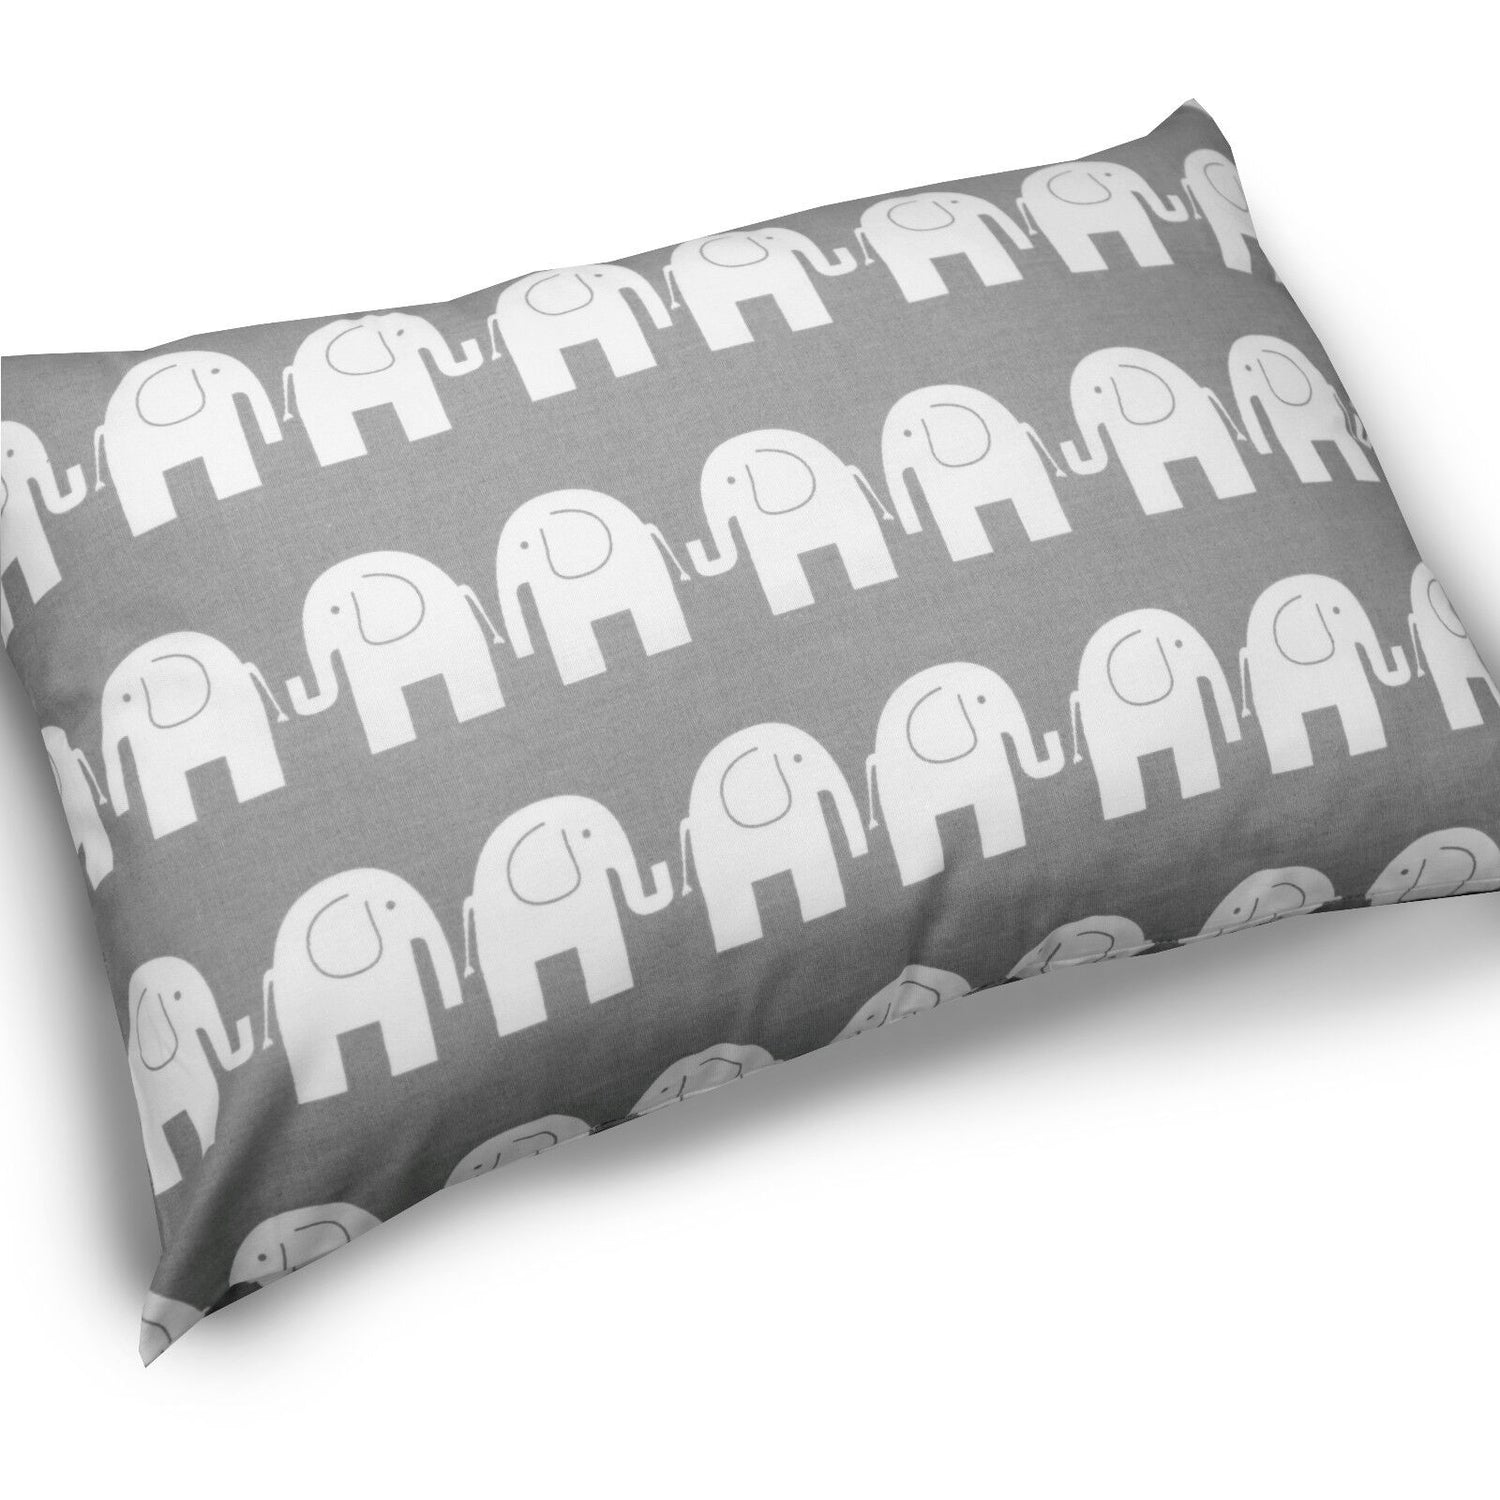 Baby Pillow case with zipper closure 60x40cm Cotton ANTI-ALLERGENIC Elephants grey